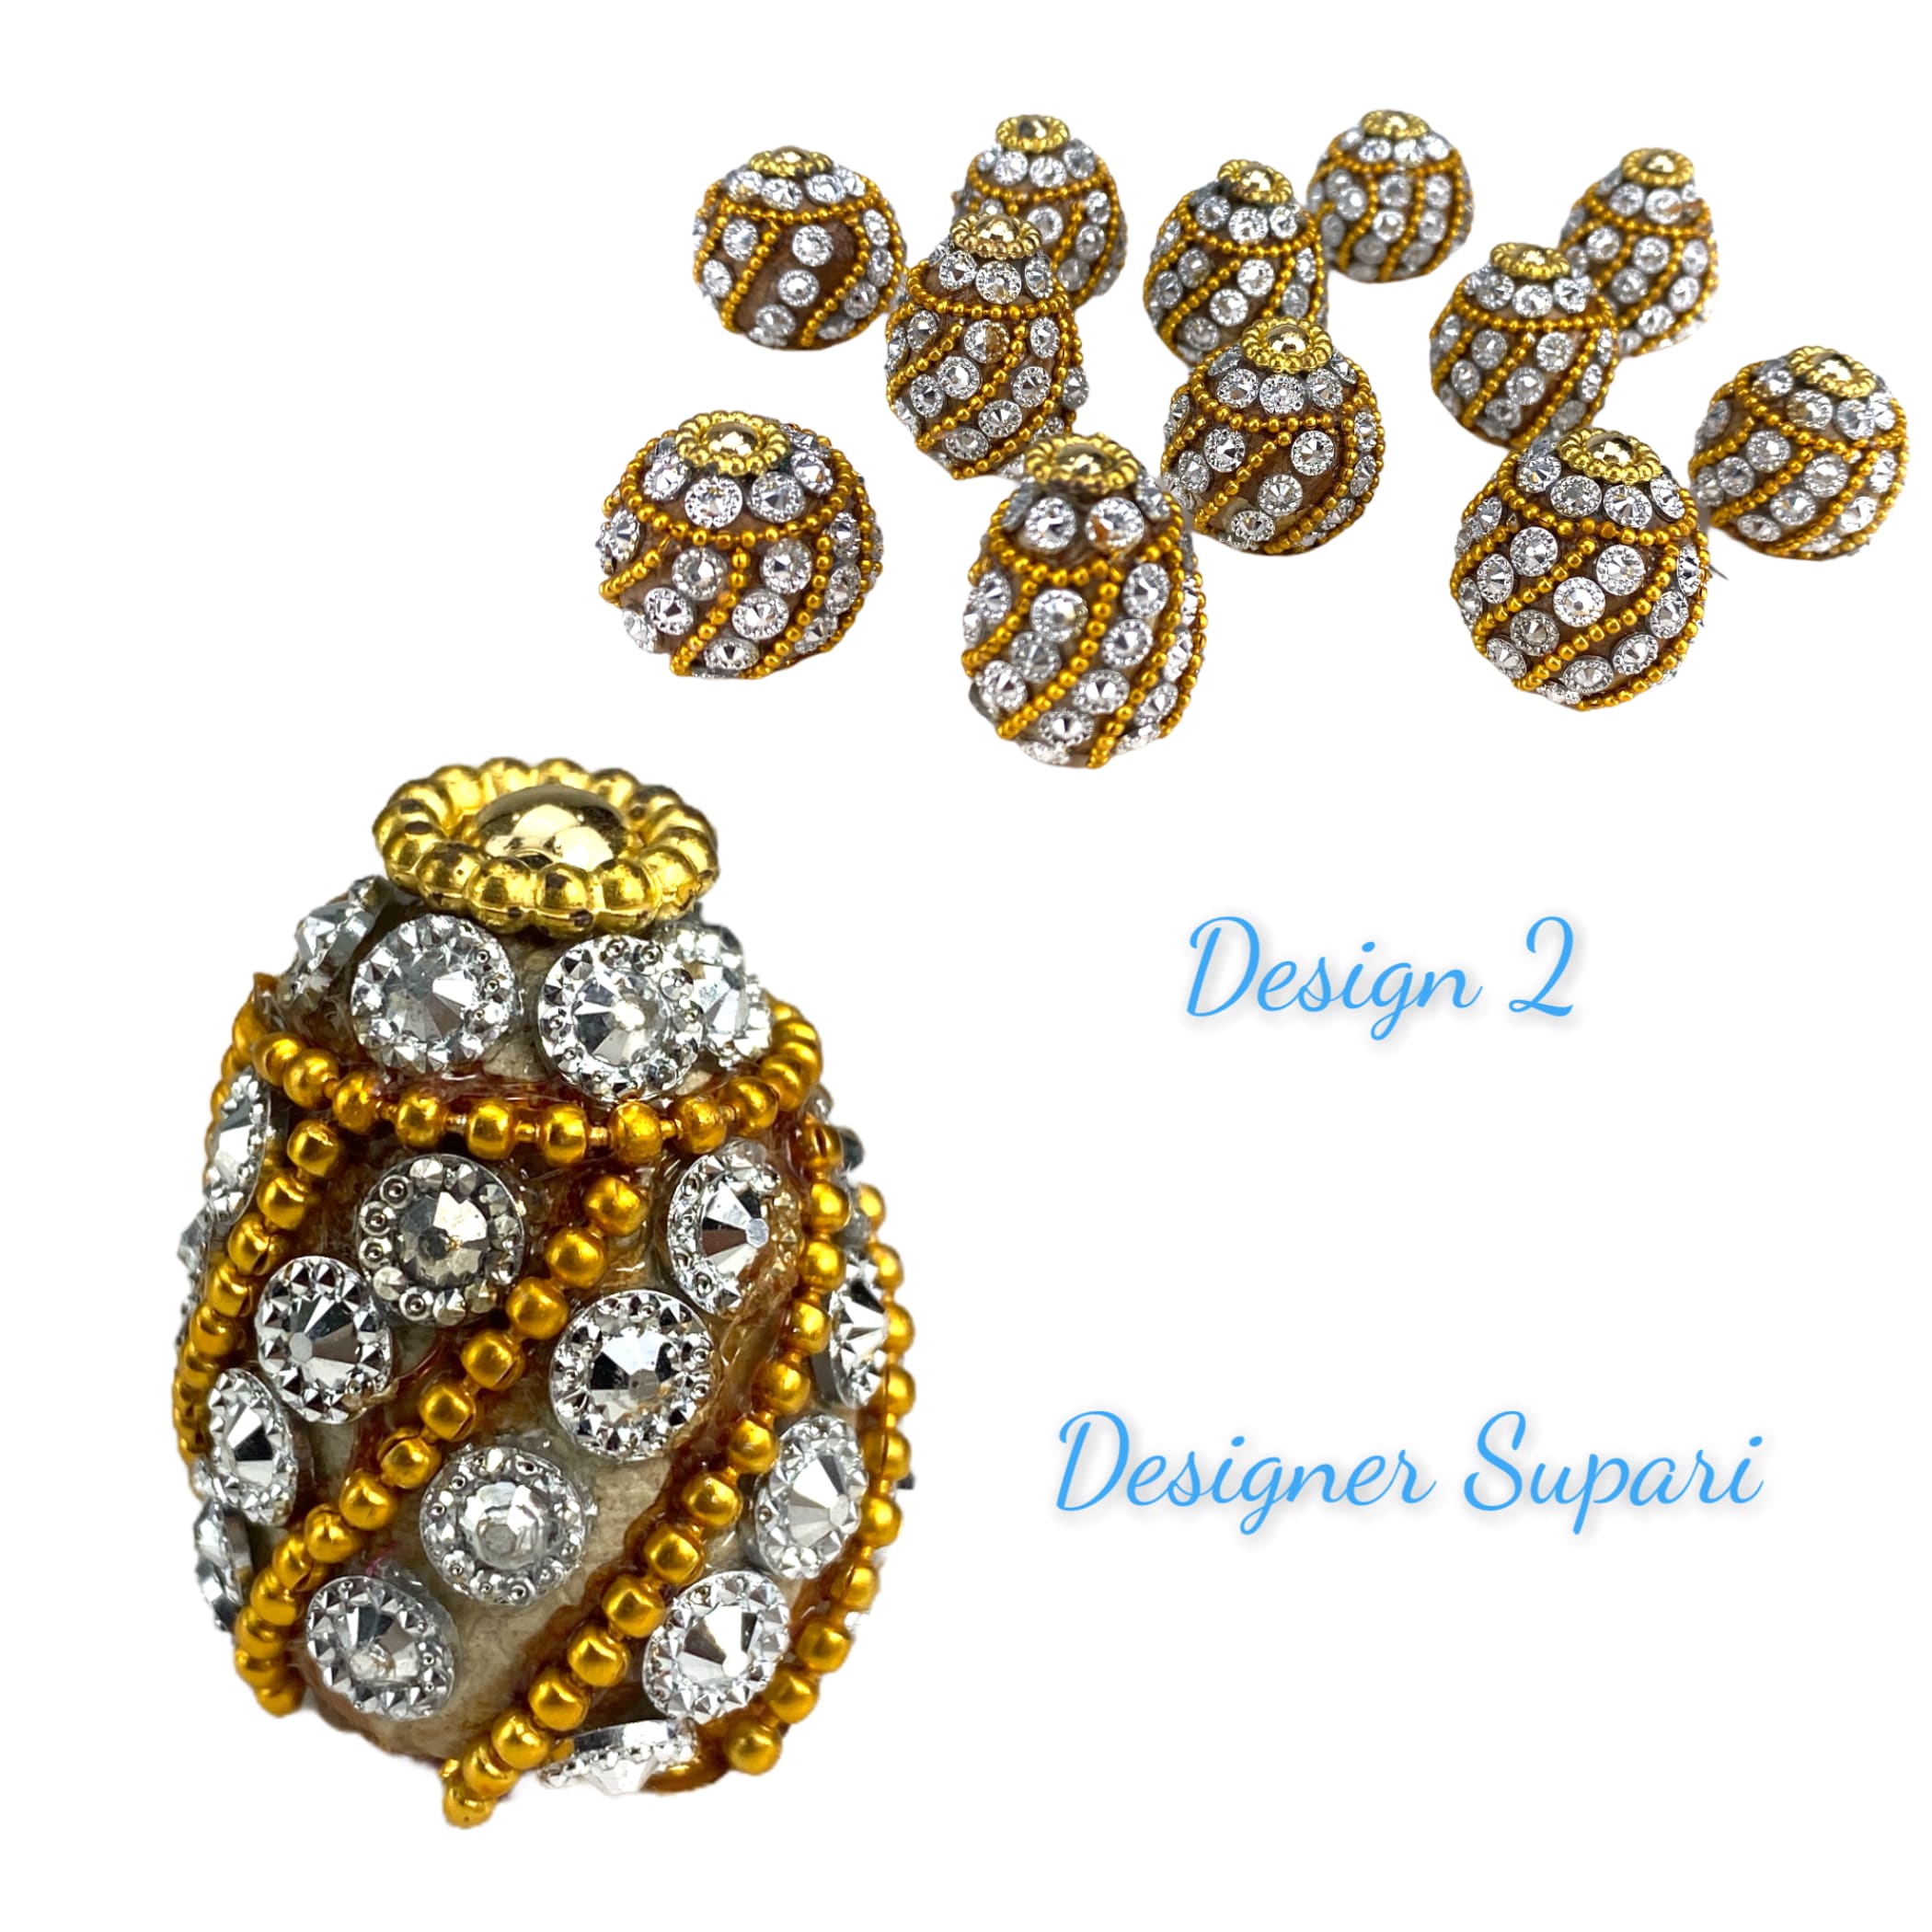 Designer supari betal nut for pooja decorative wedding hindu